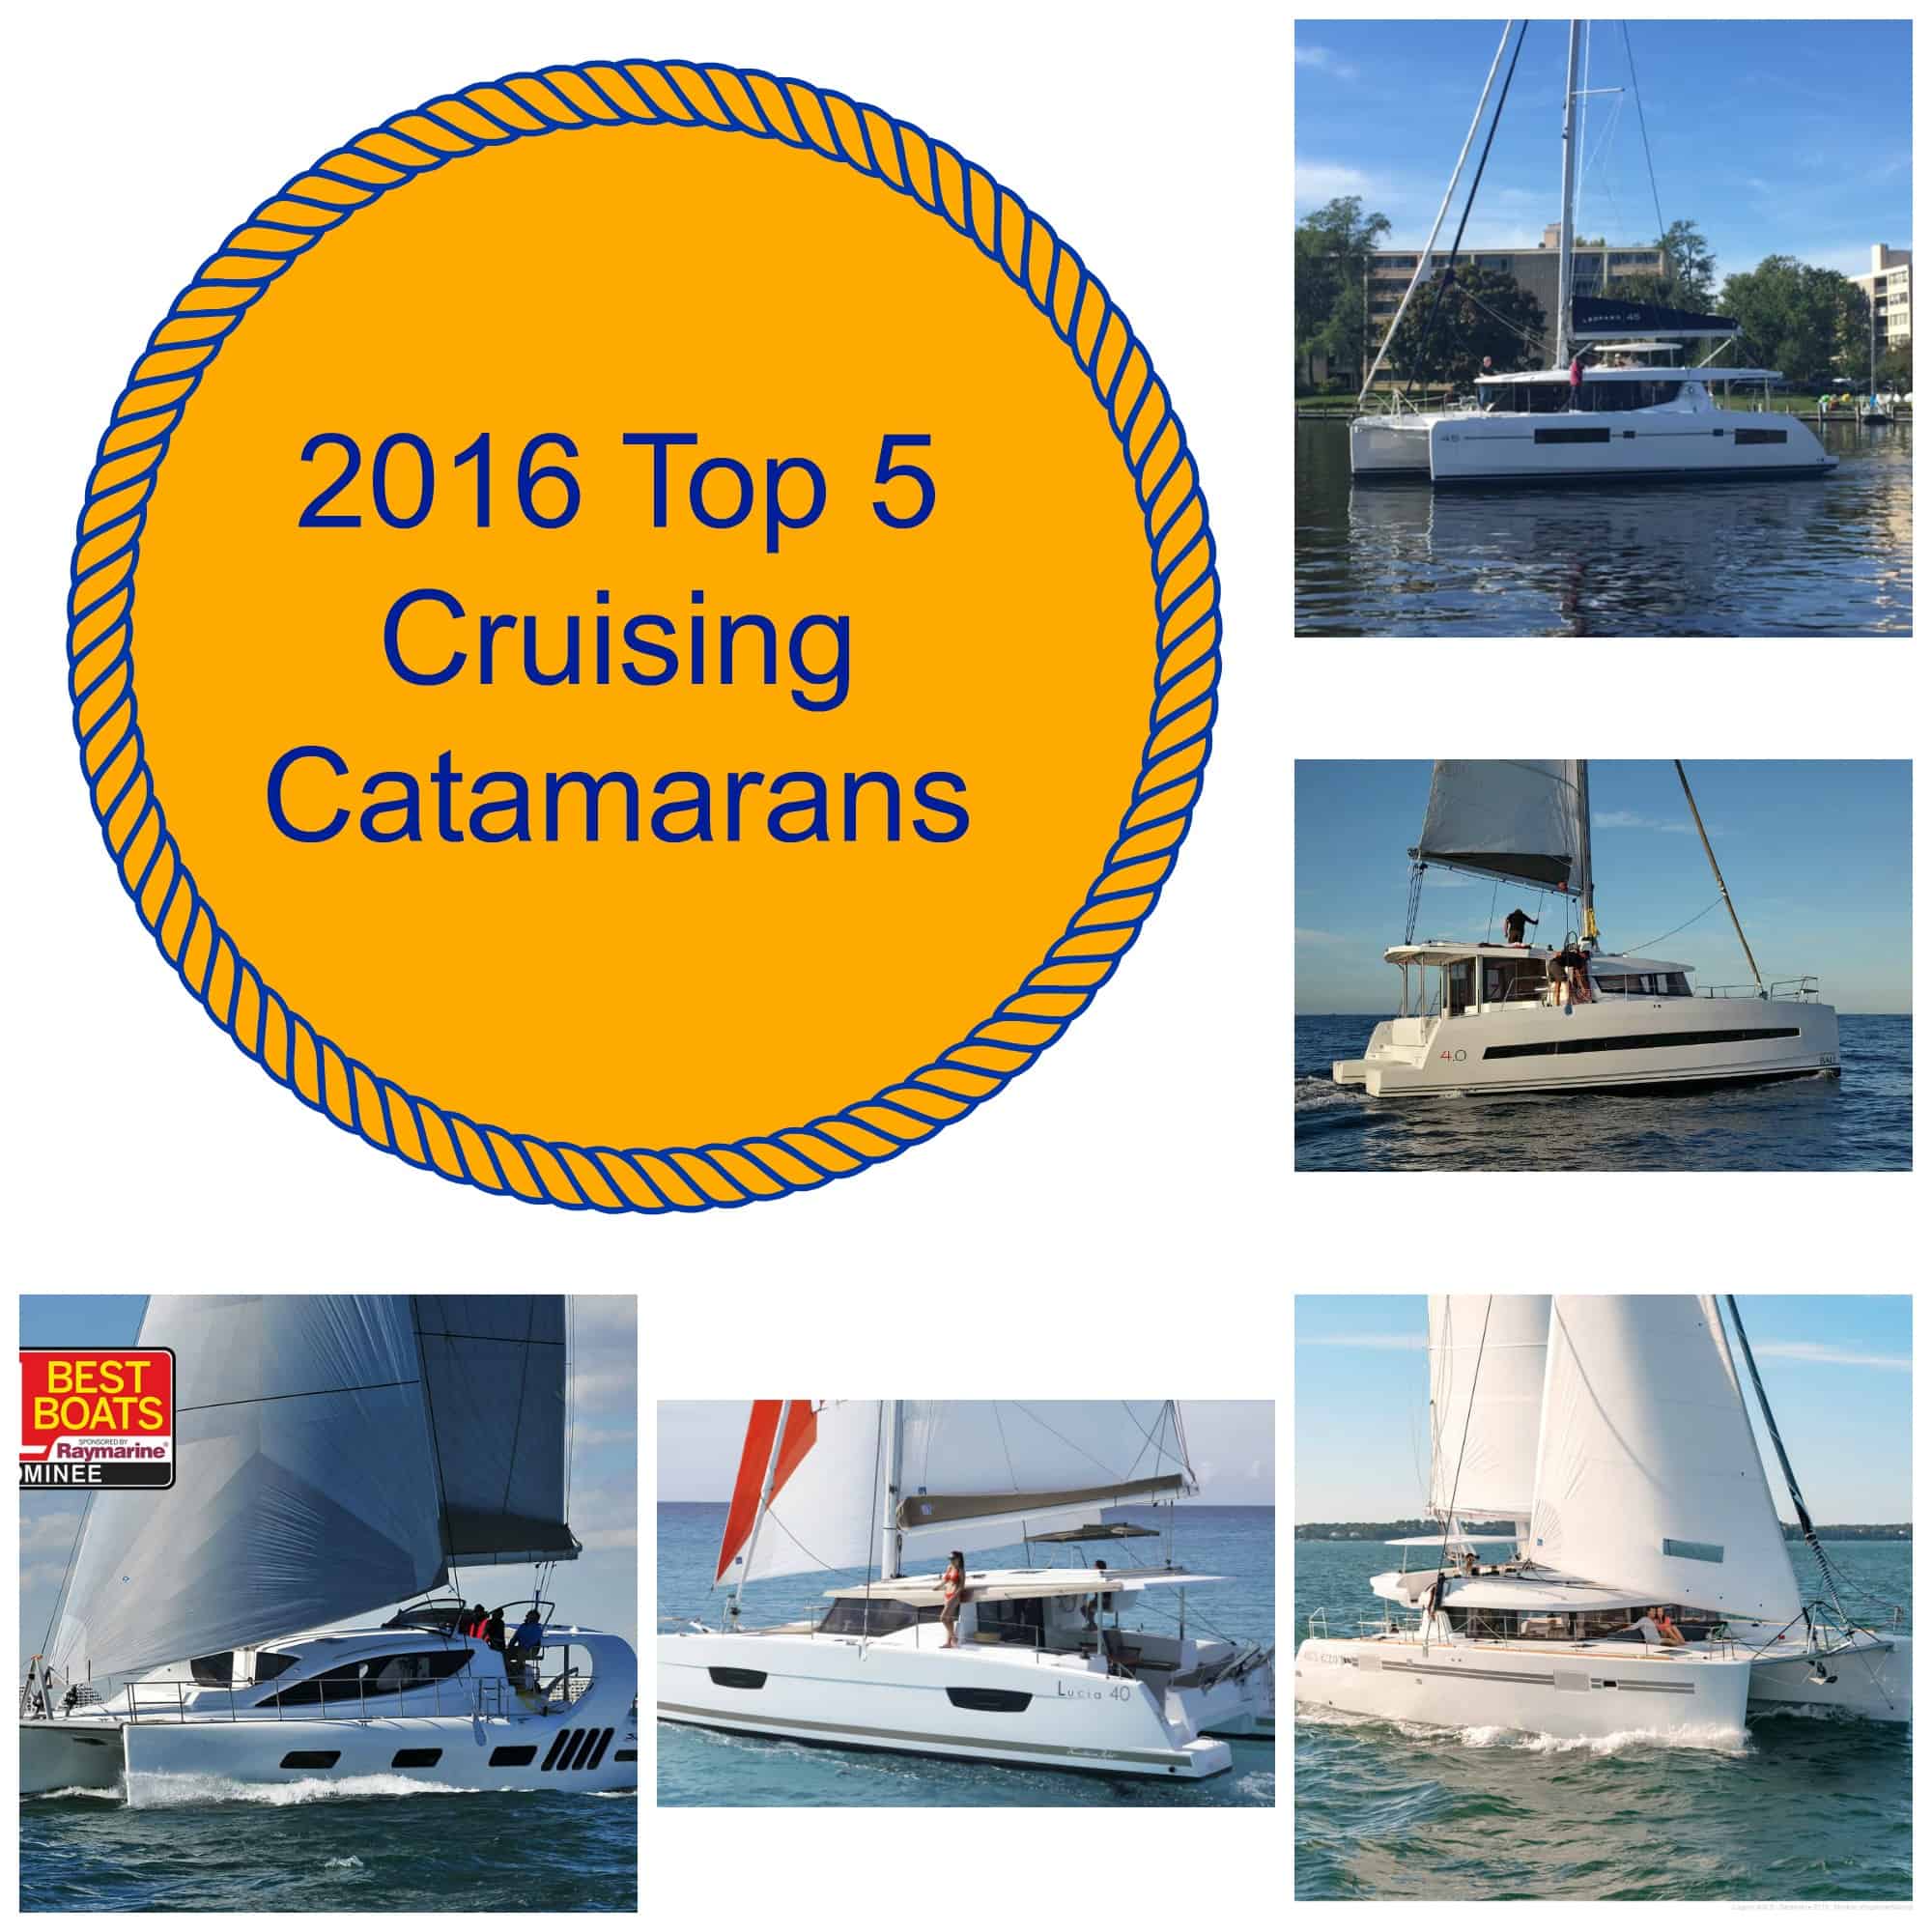 Top 5 cruising catamarans